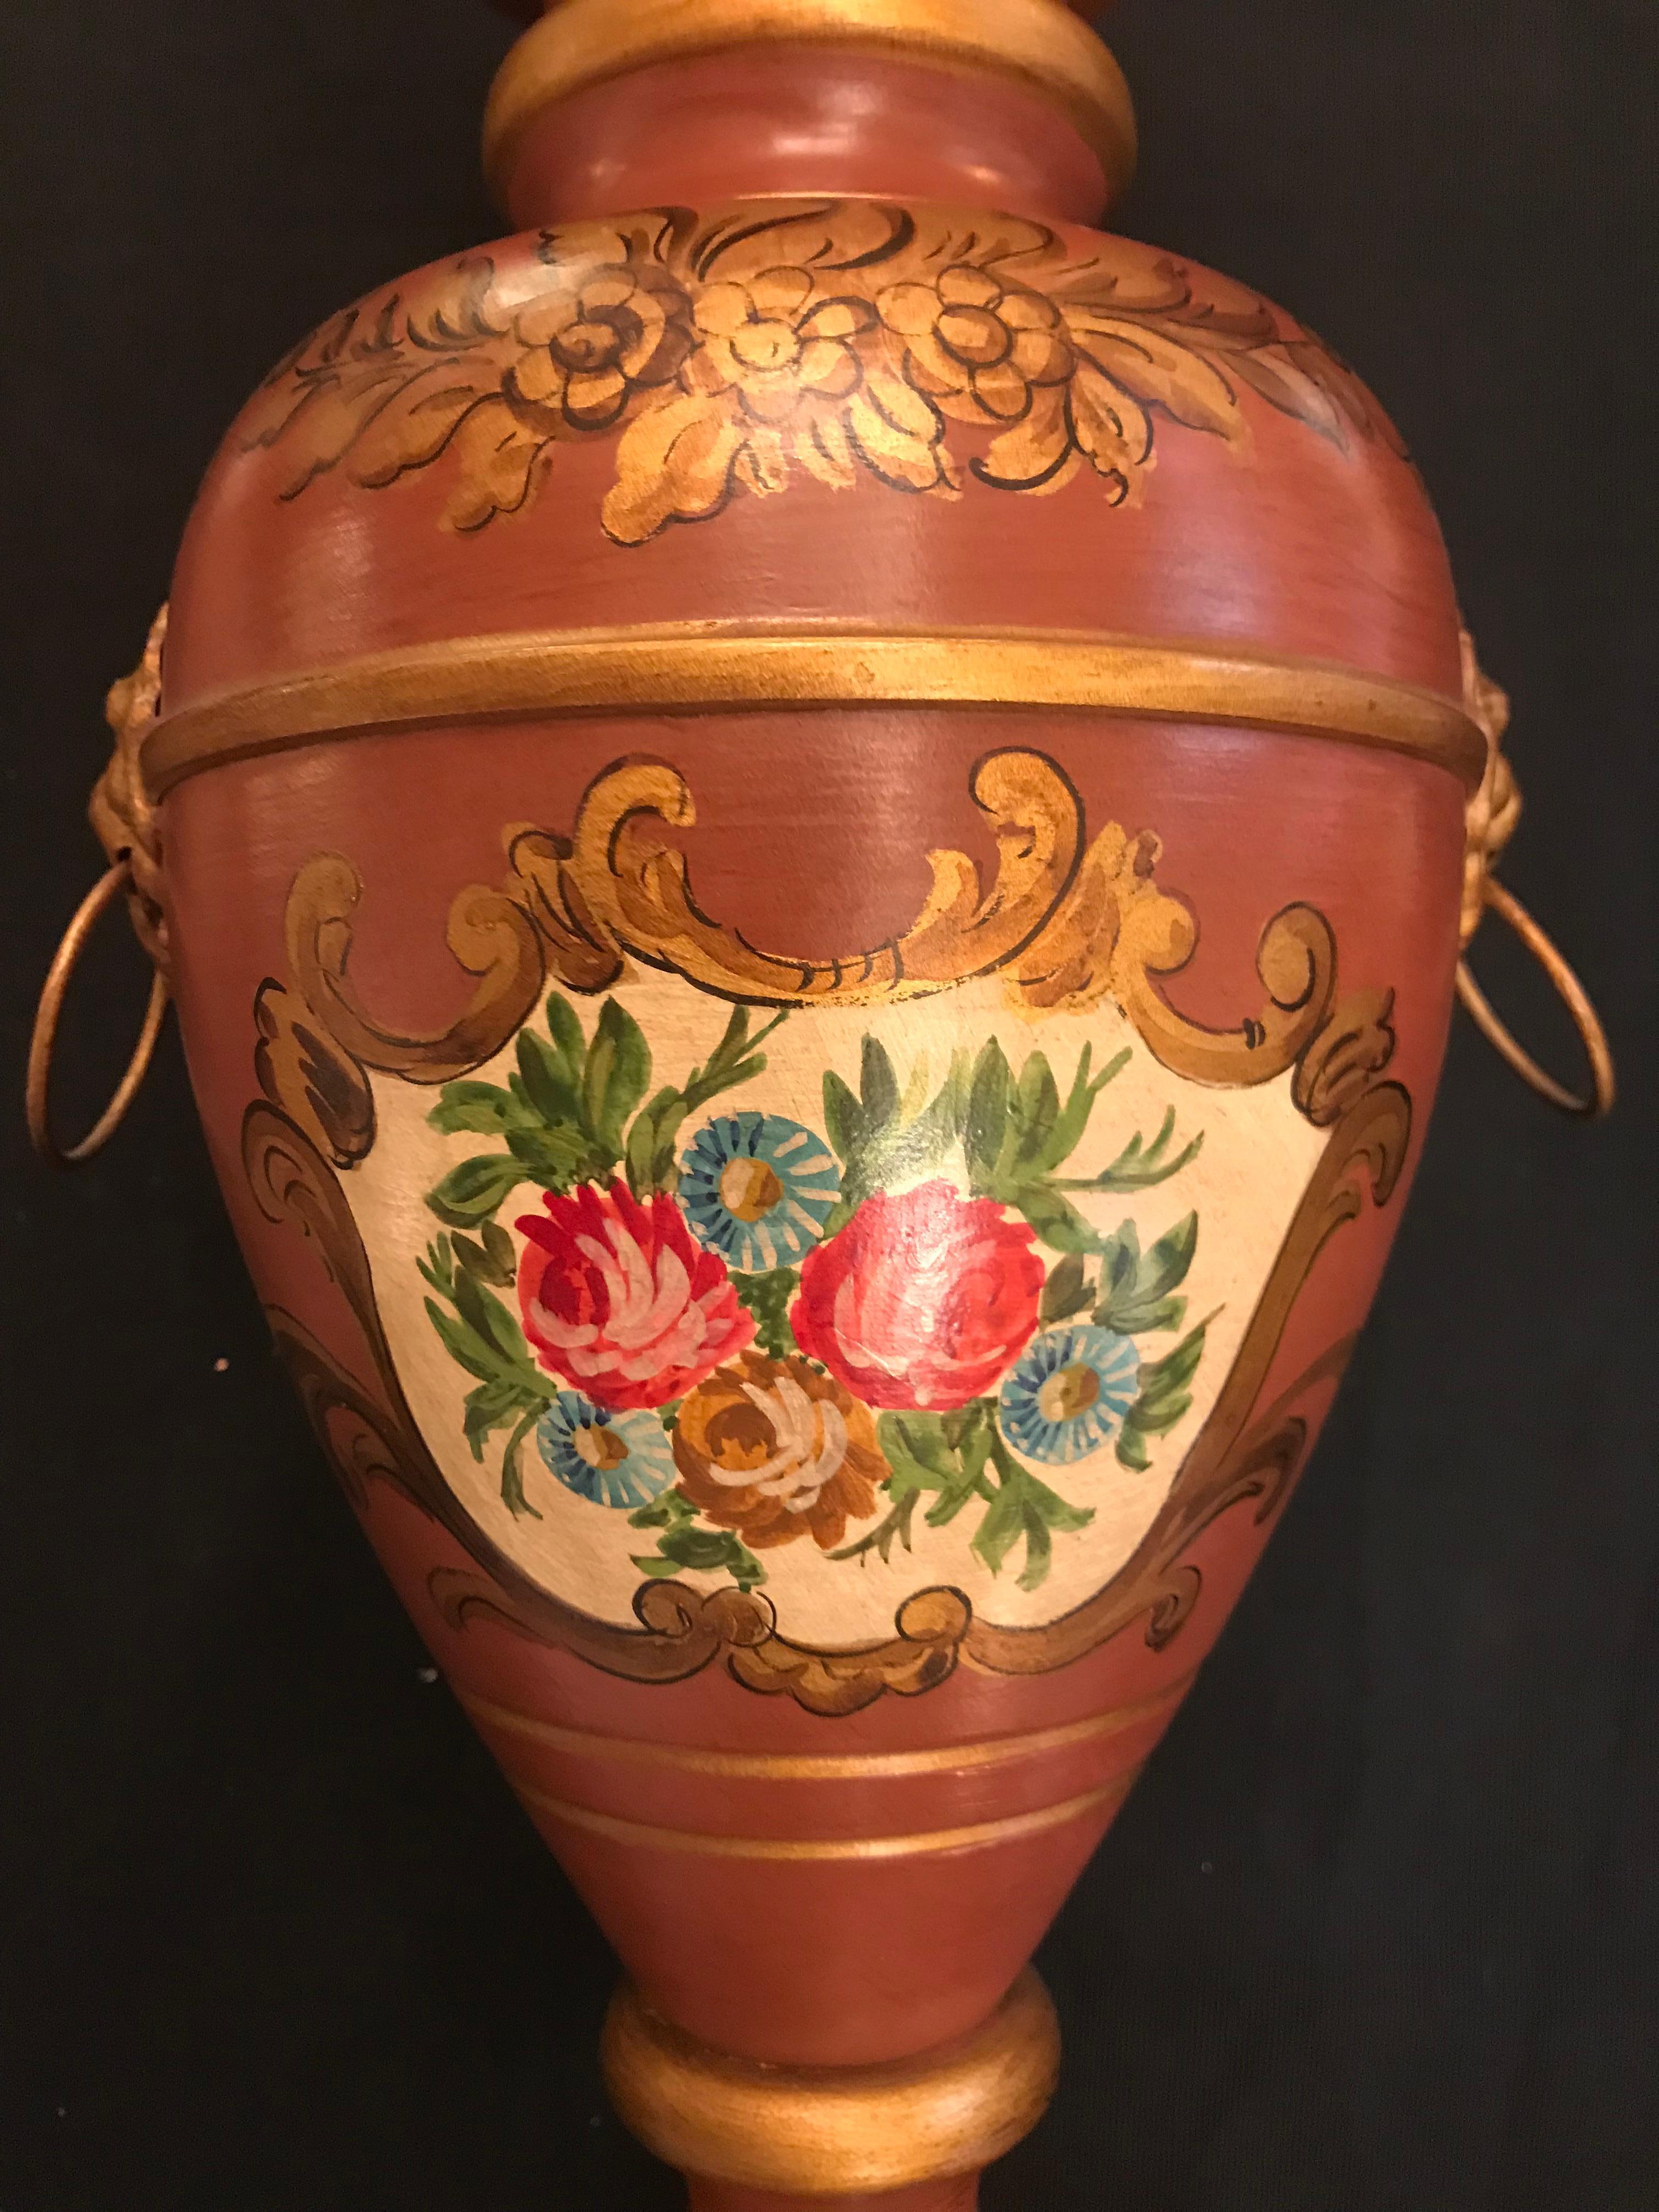 Regency Revival English Regency Style Hand-Painted Toleware Lamp By Gherardo Degli Albizzi  For Sale